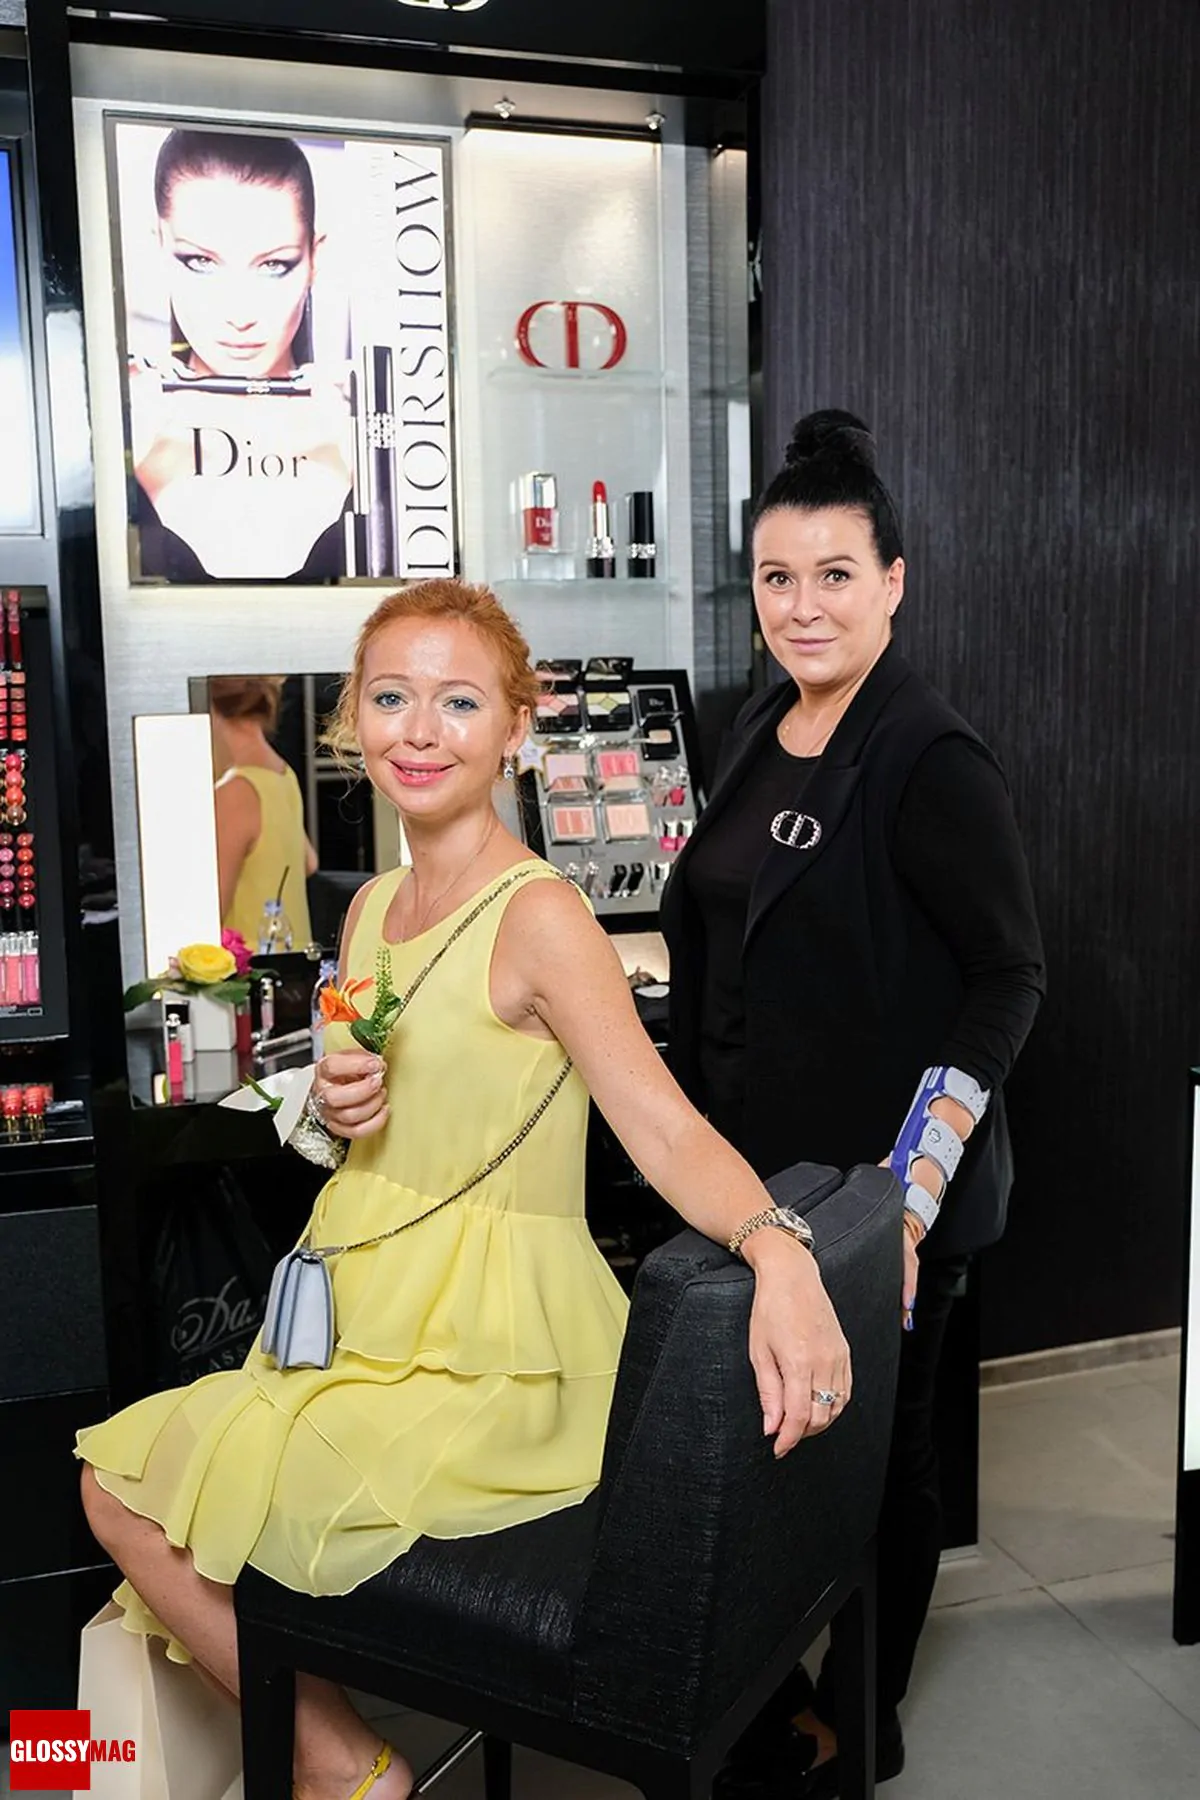 Елена Захарова, Марина Хитушко в корнере Dior на закрытом мероприятии Beauty CHOICE в Rivoli Perfumery в ТГ Модный сезон, 28 июня 2017 г.